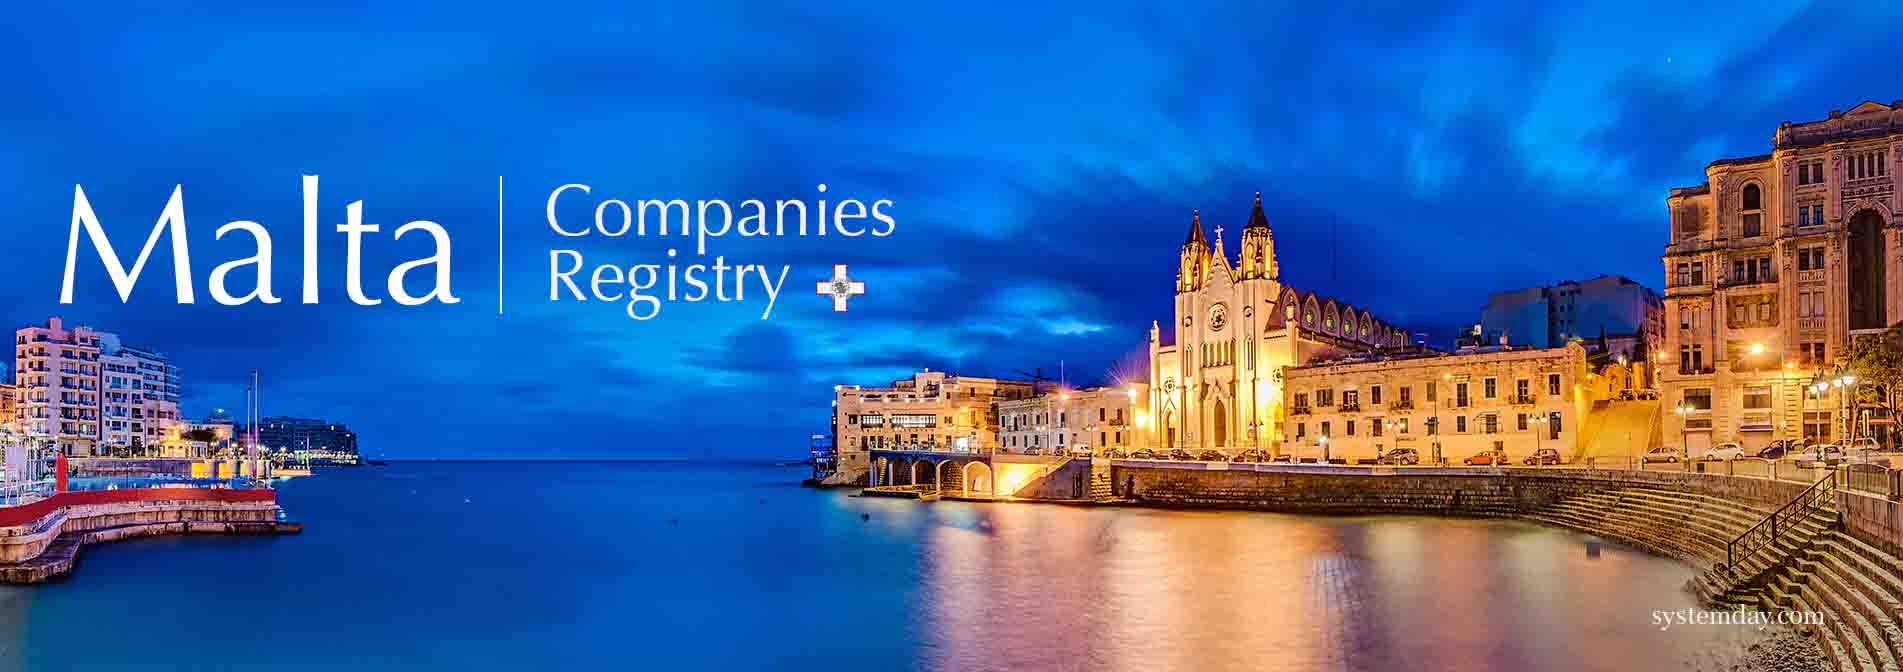 Malta Companies Registry